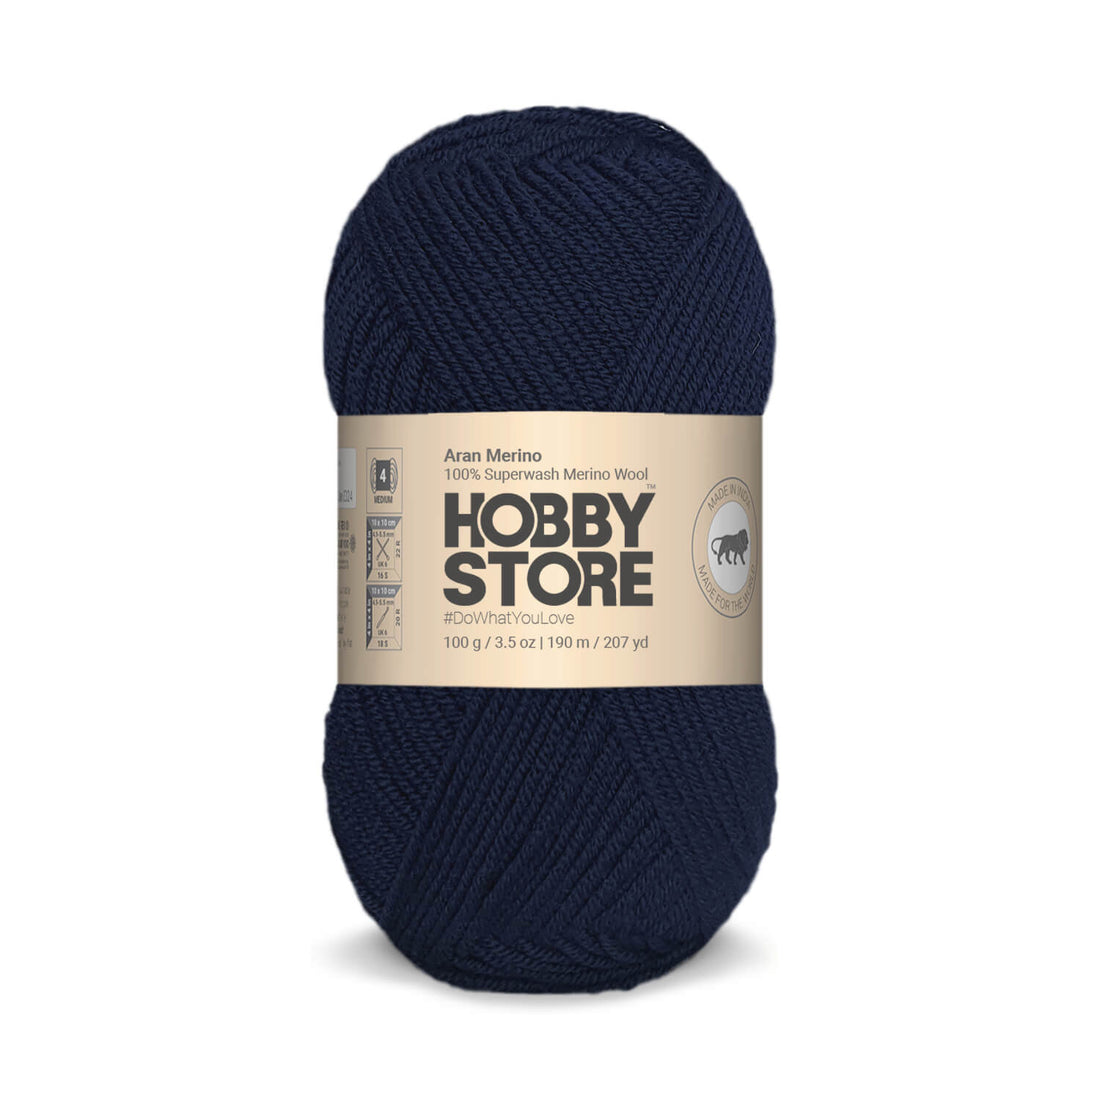 Aran Merino Wool by Hobby Store - Navy Blue AM004